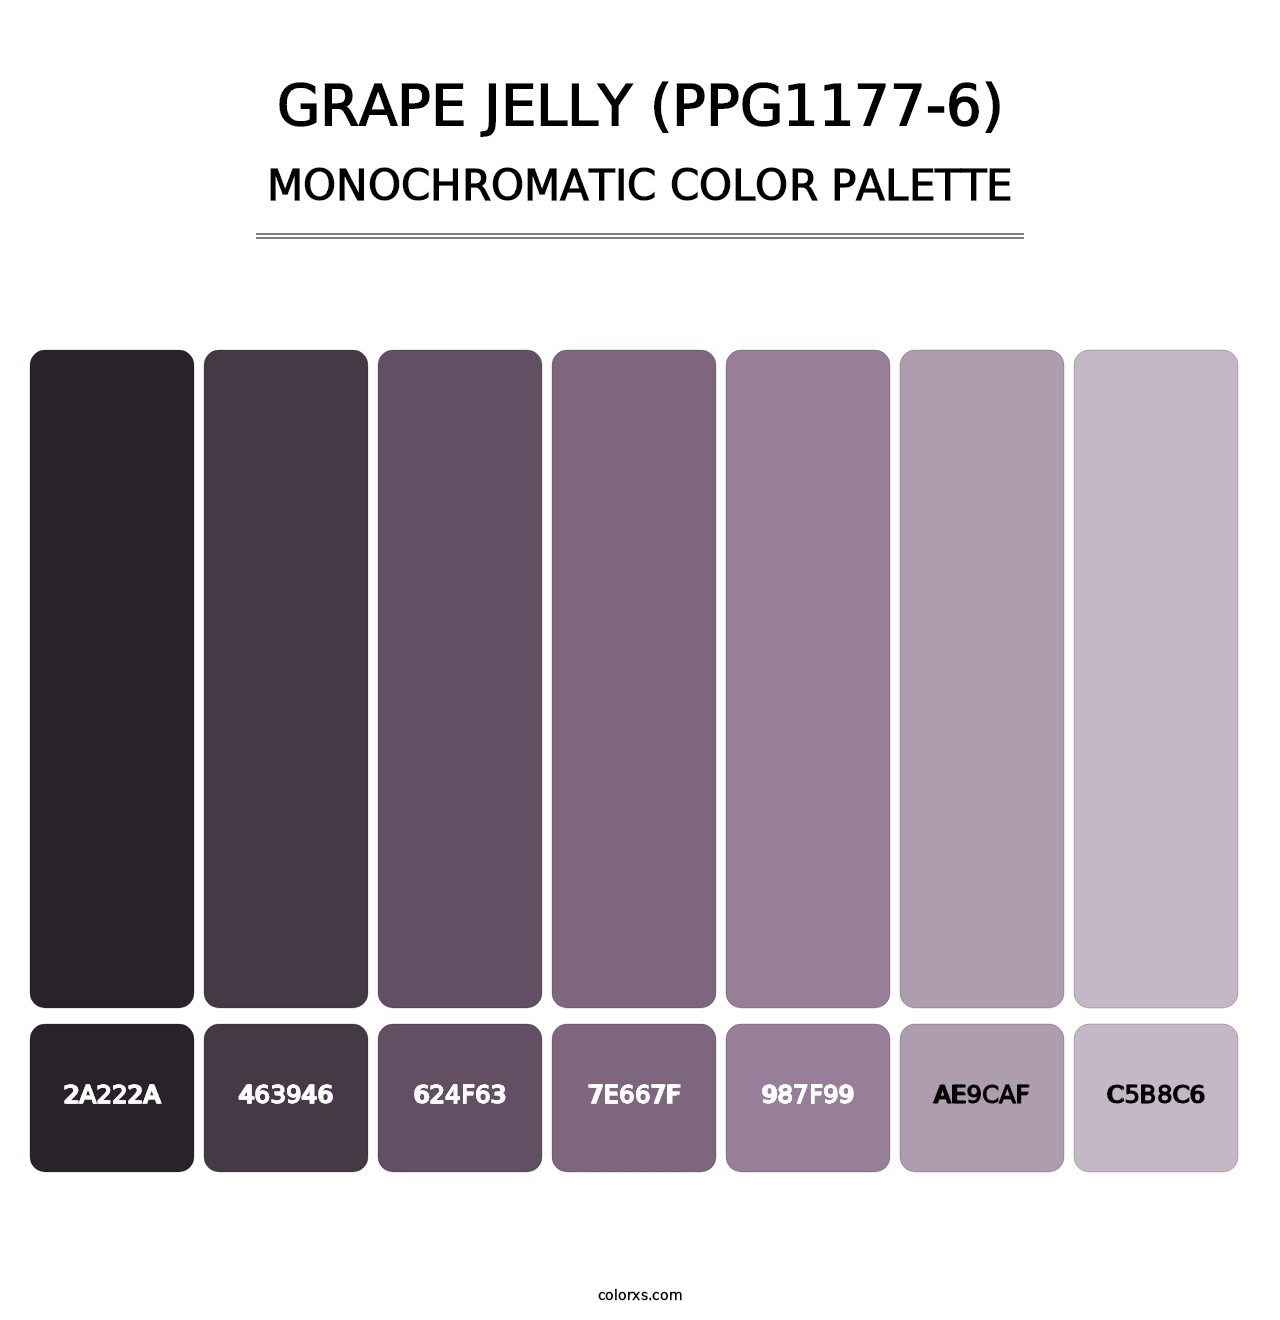 Grape Jelly (PPG1177-6) - Monochromatic Color Palette